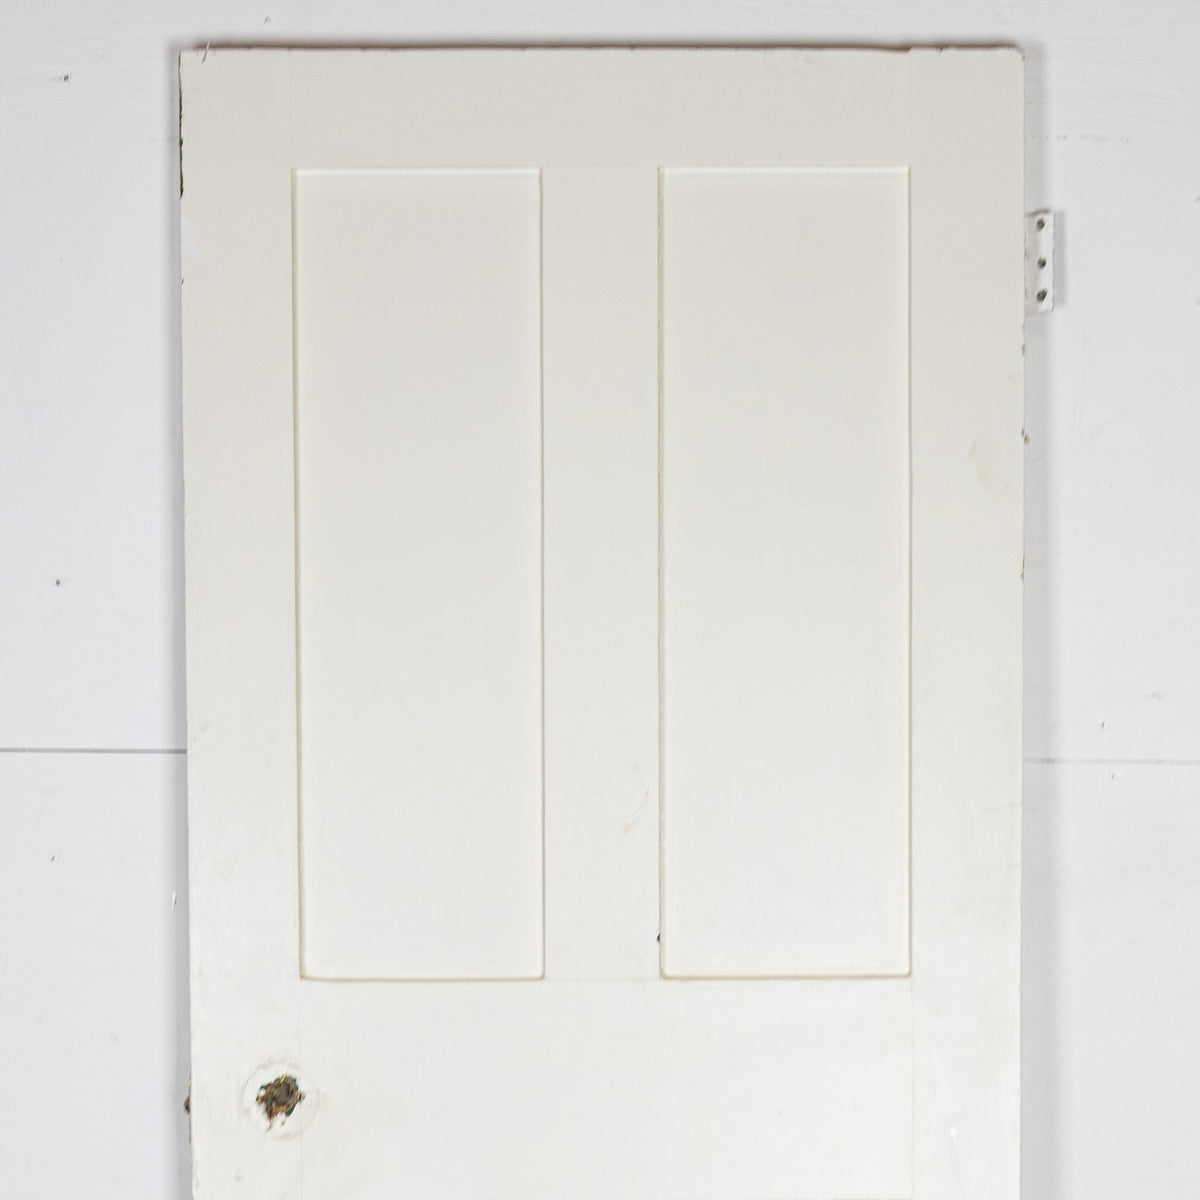 Antique Victorian 4 Panel Door - 177 x 65cm | The Architectural Forum